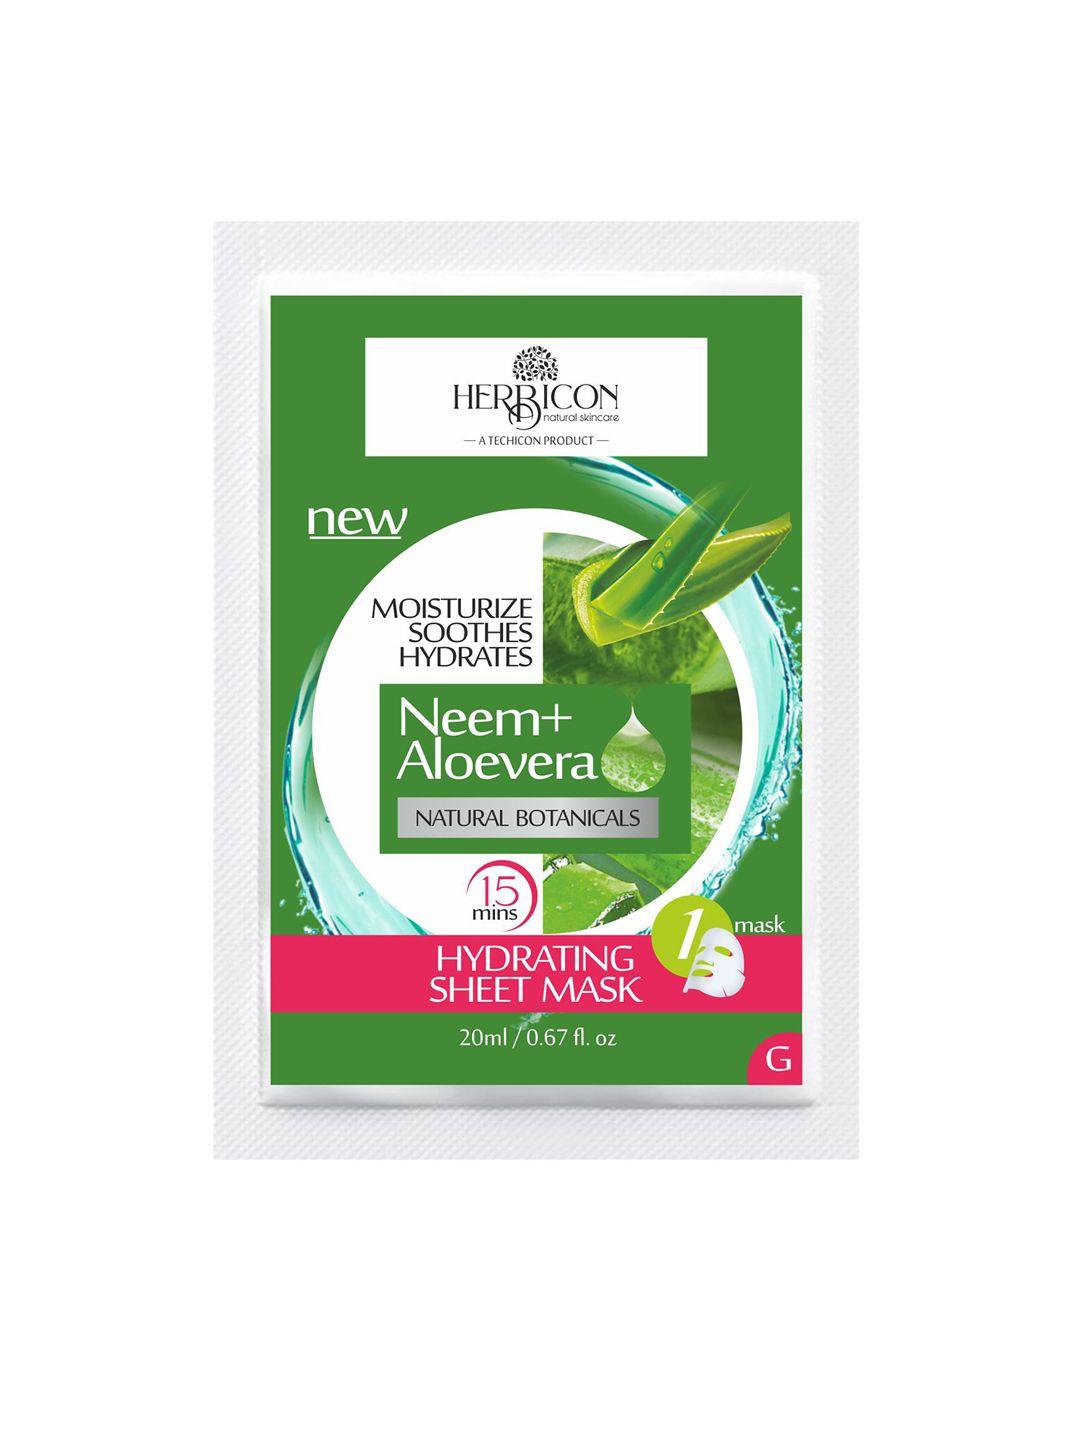 herbicon neem & aloe vera hydrating face sheet mask